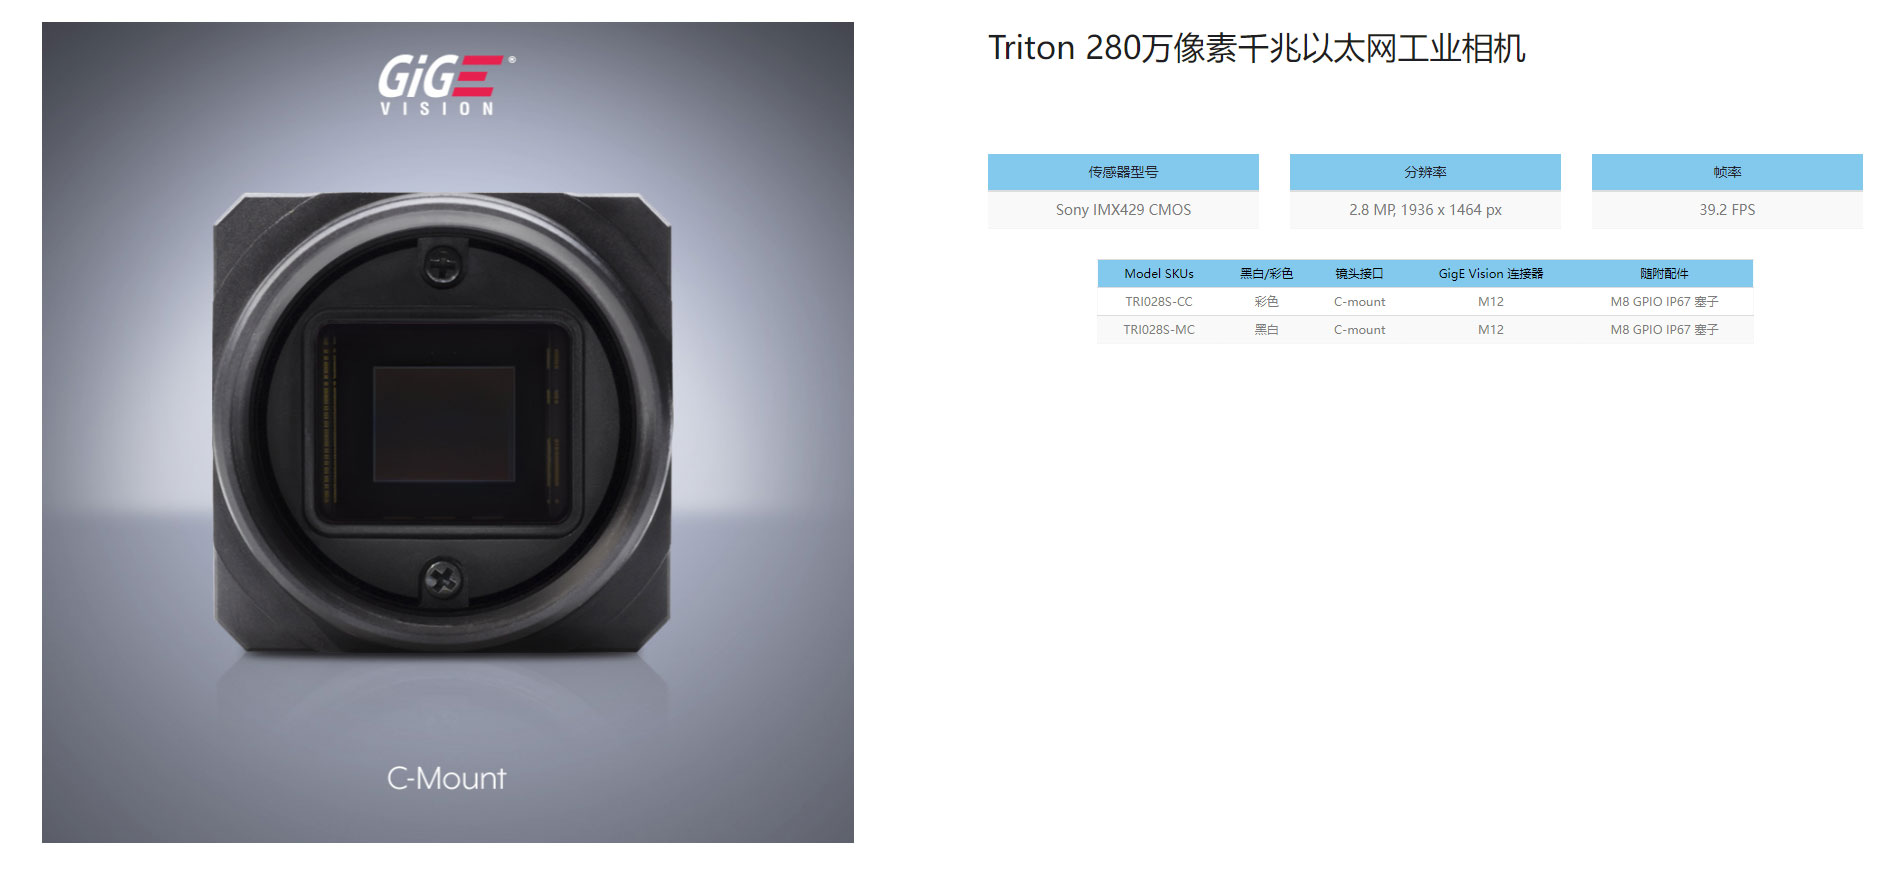 1Triton-280万像素千兆以太网工业相机-(TRI028S-_-IMX429)-_-Lucid-Vision-Labs_02